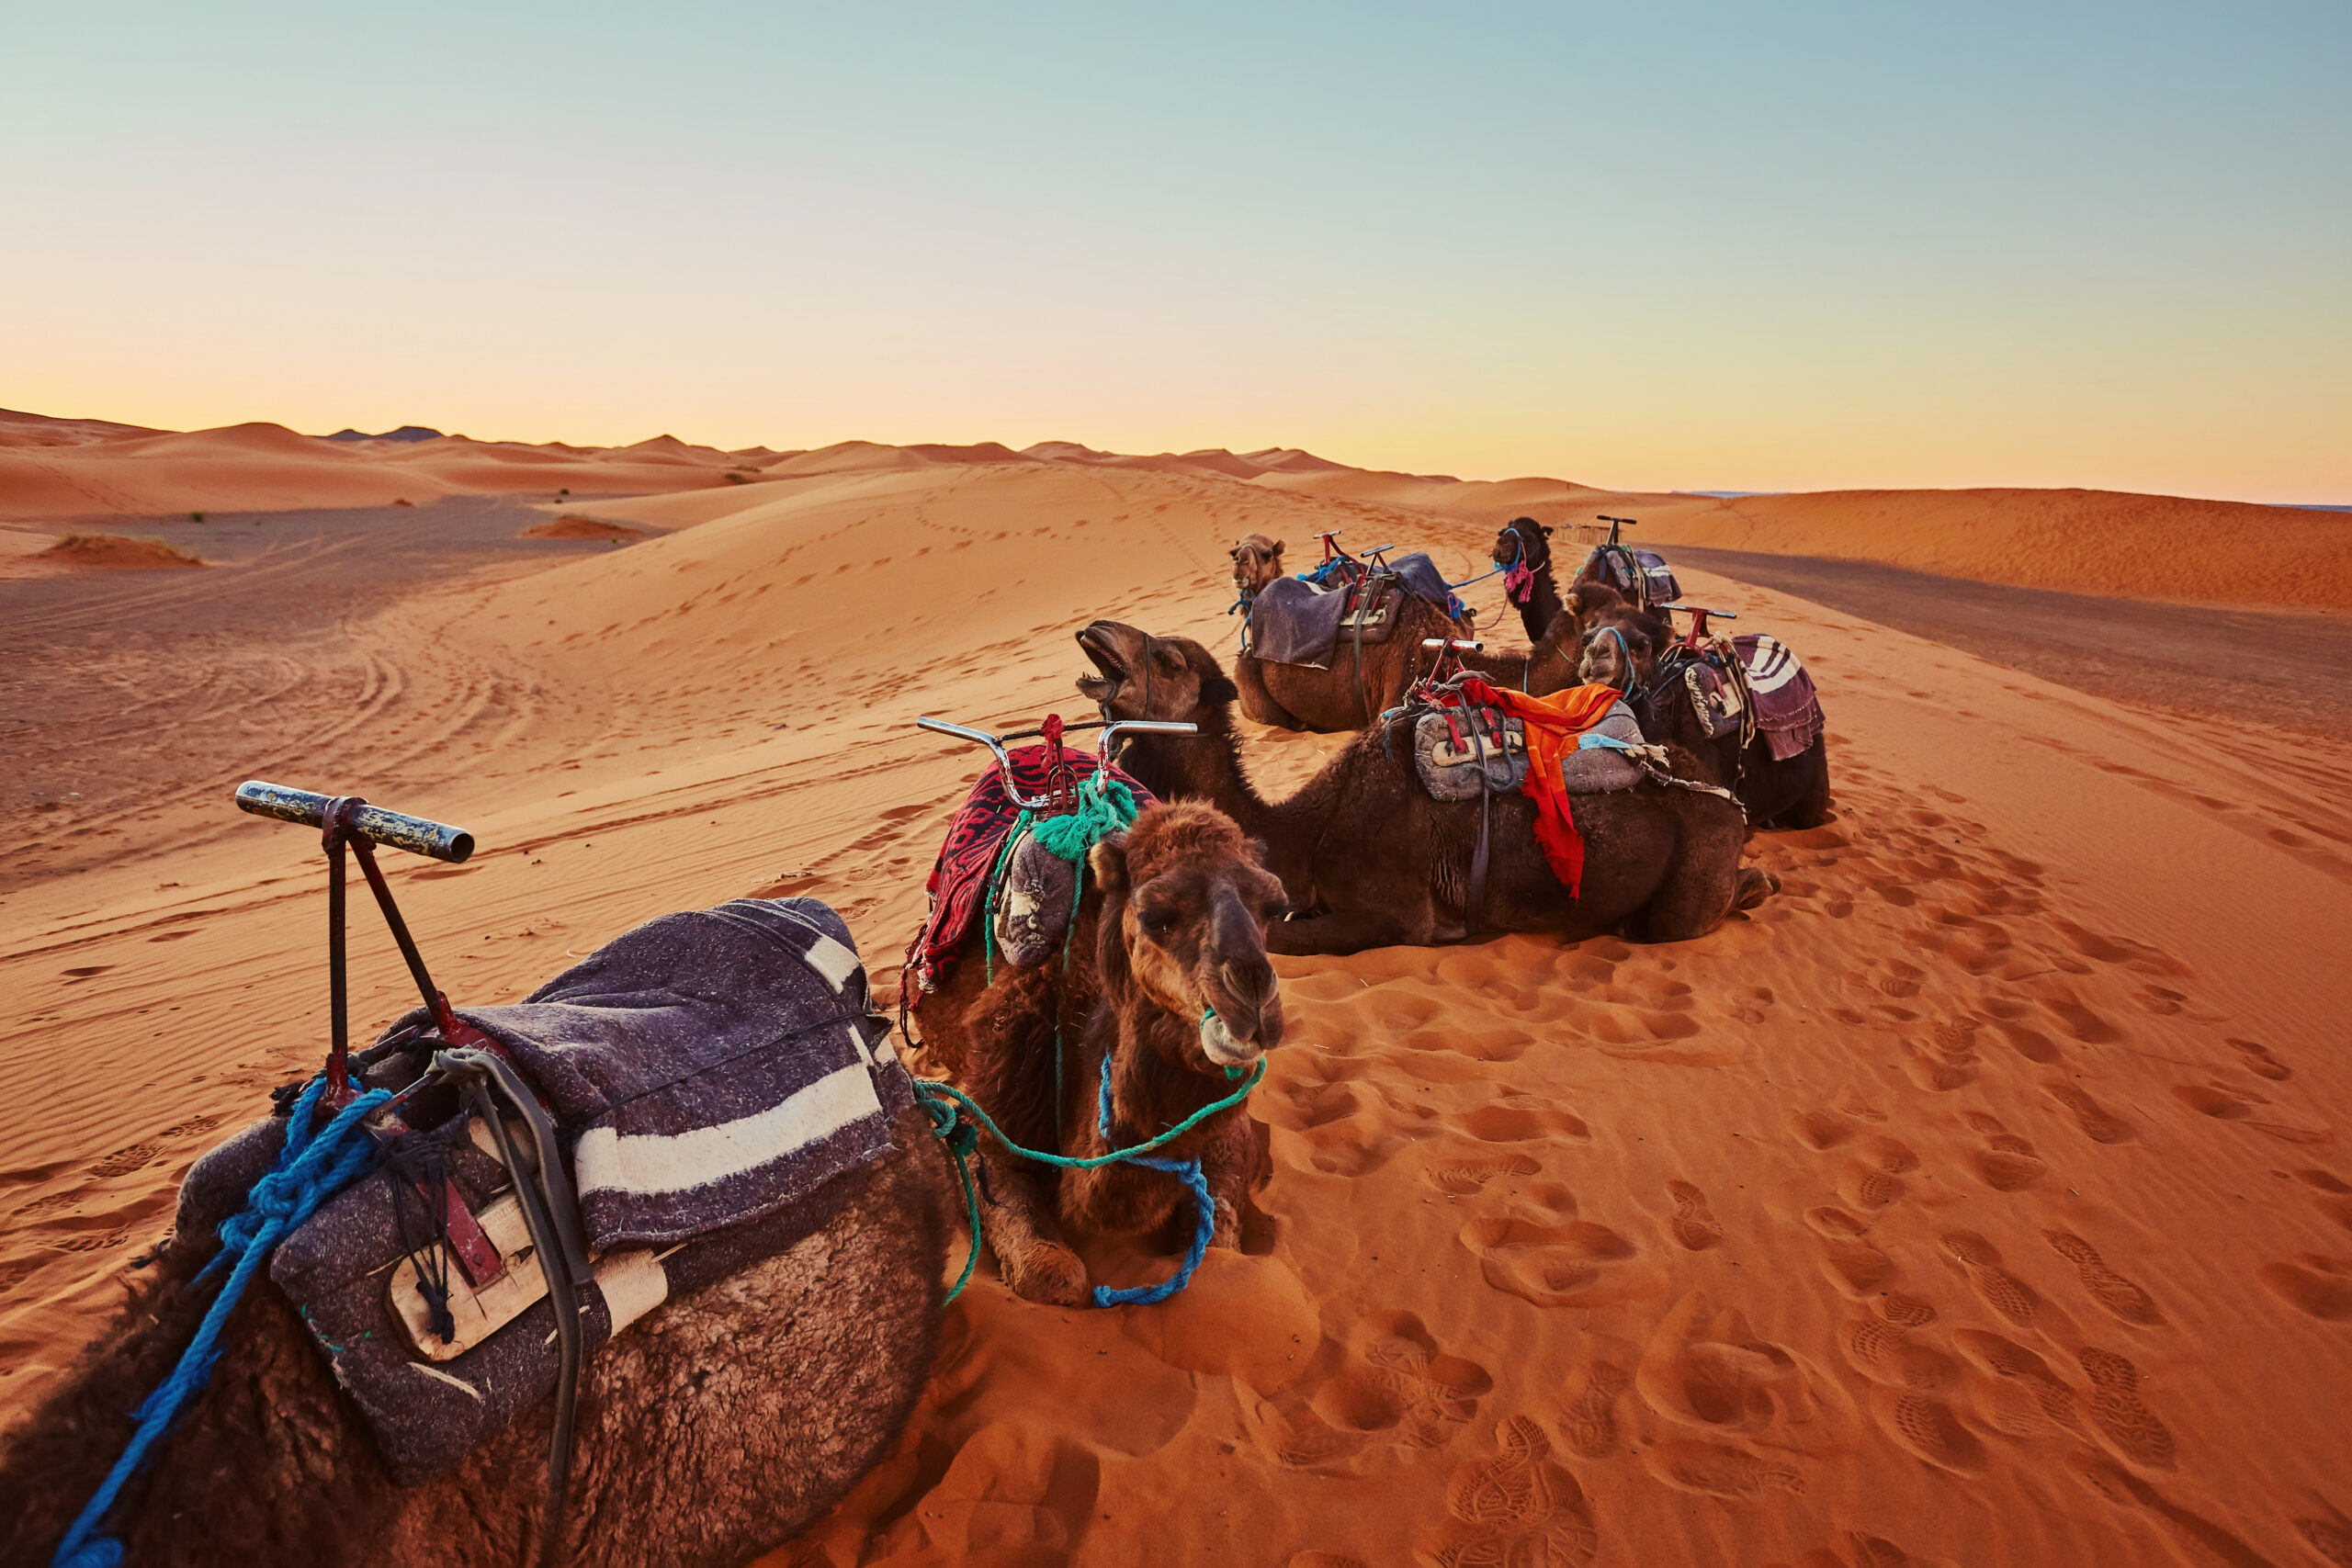 Camel in the Sahara desert in Morocco standing on a dune